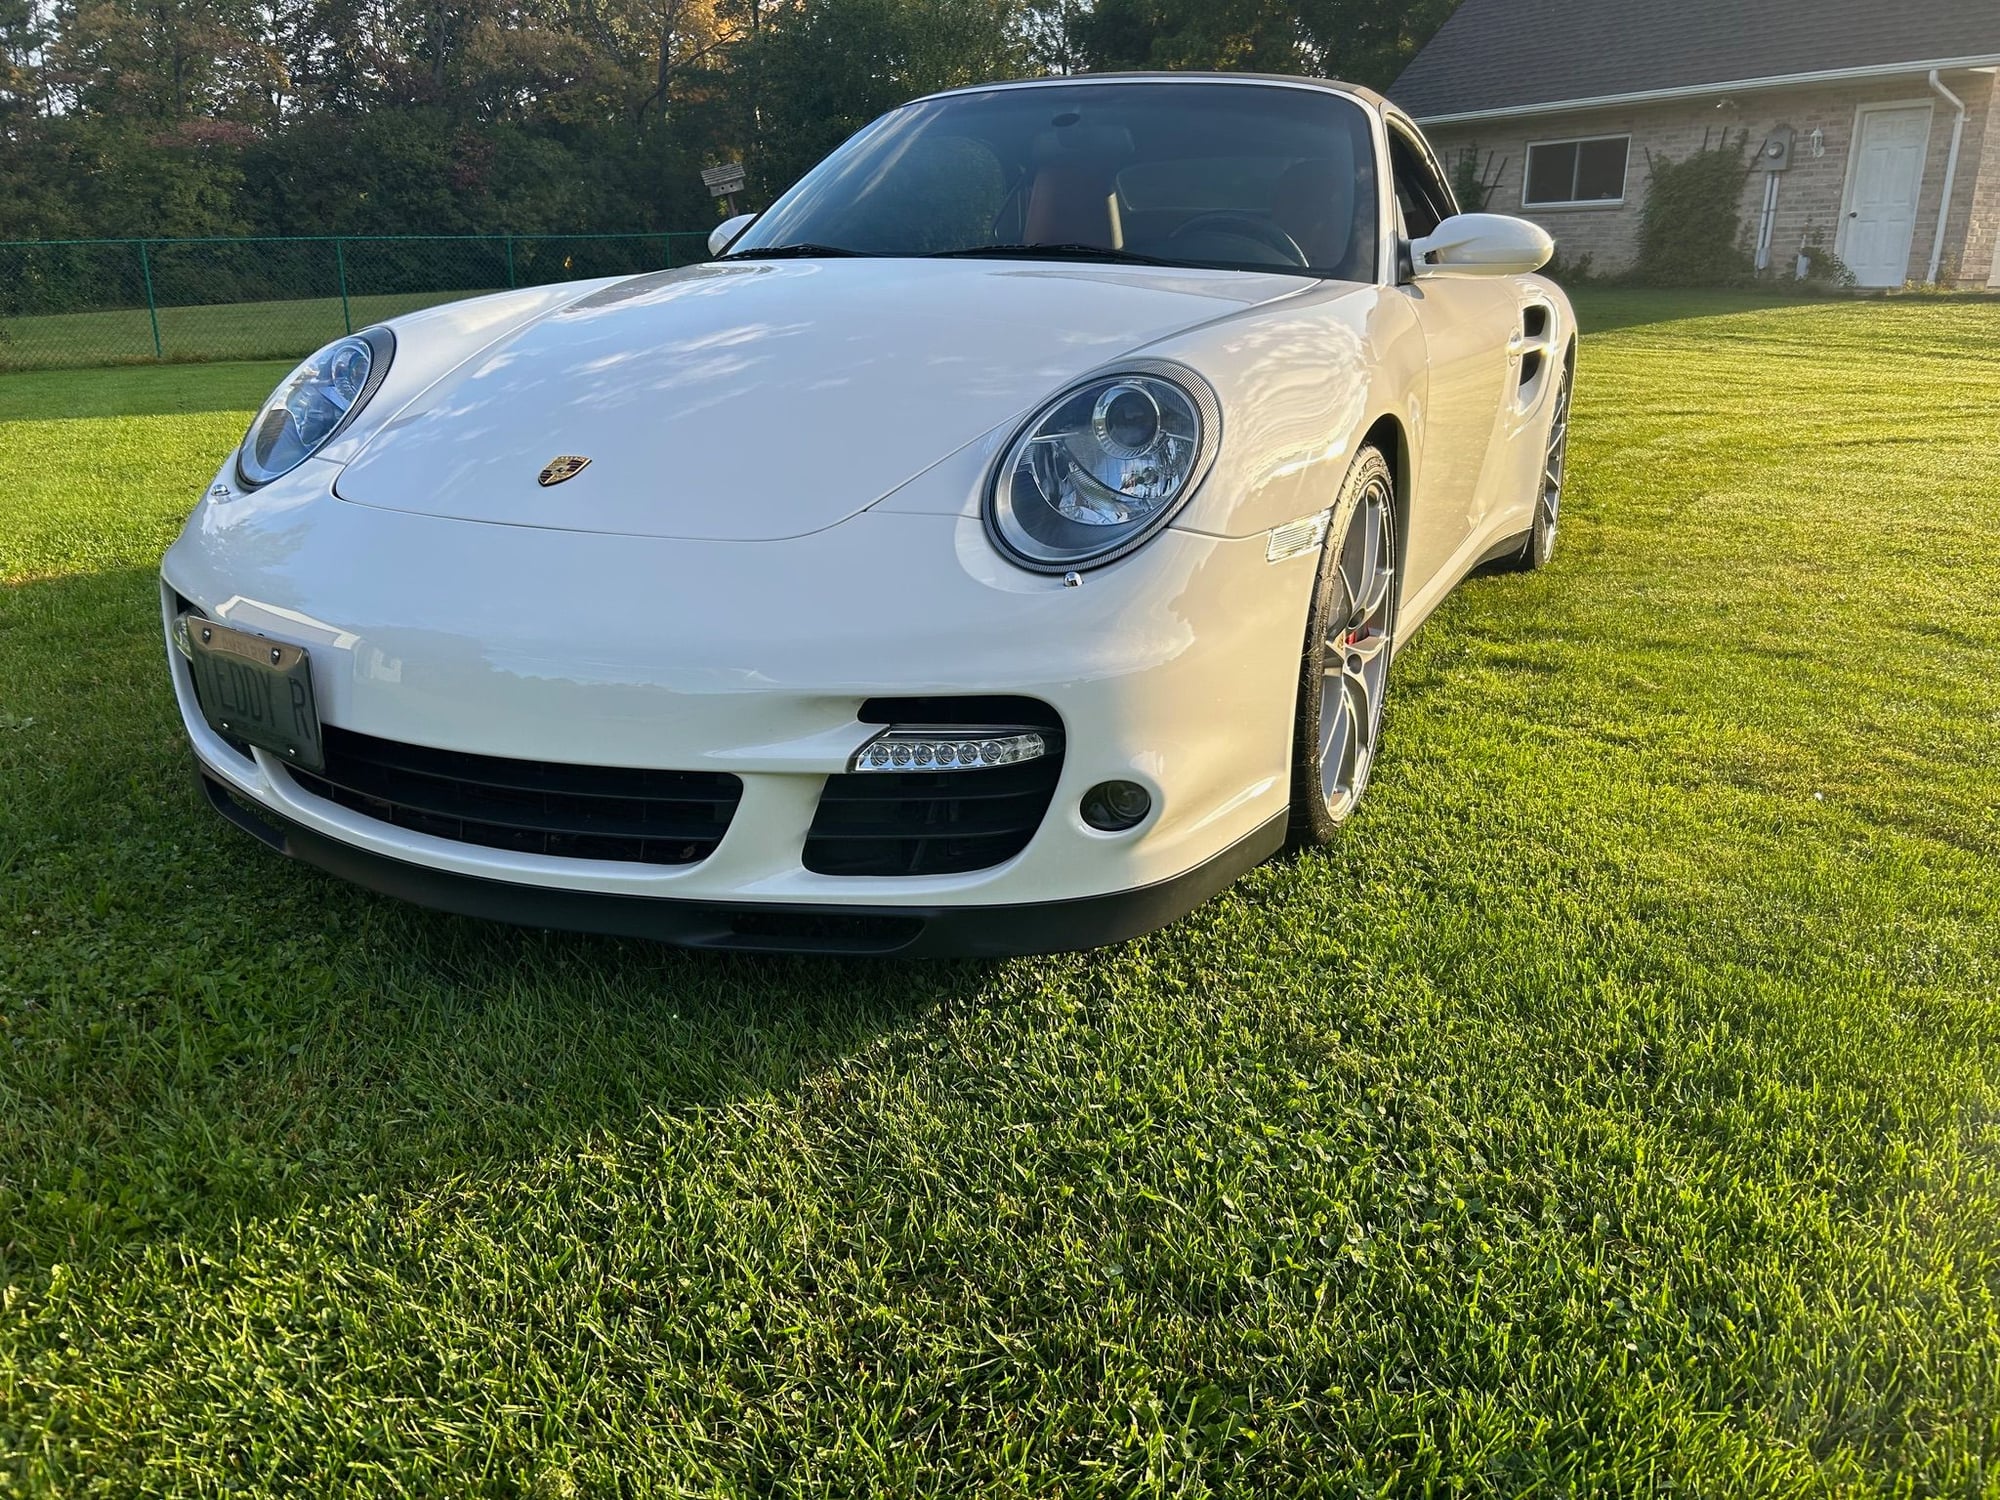 2008 Porsche 911 - 2008 997 Turbo Cabrio, manual - Used - VIN 00000000000000000 - 46,000 Miles - 6 cyl - AWD - Manual - Convertible - White - Niagara Falls, NY 14001, United States